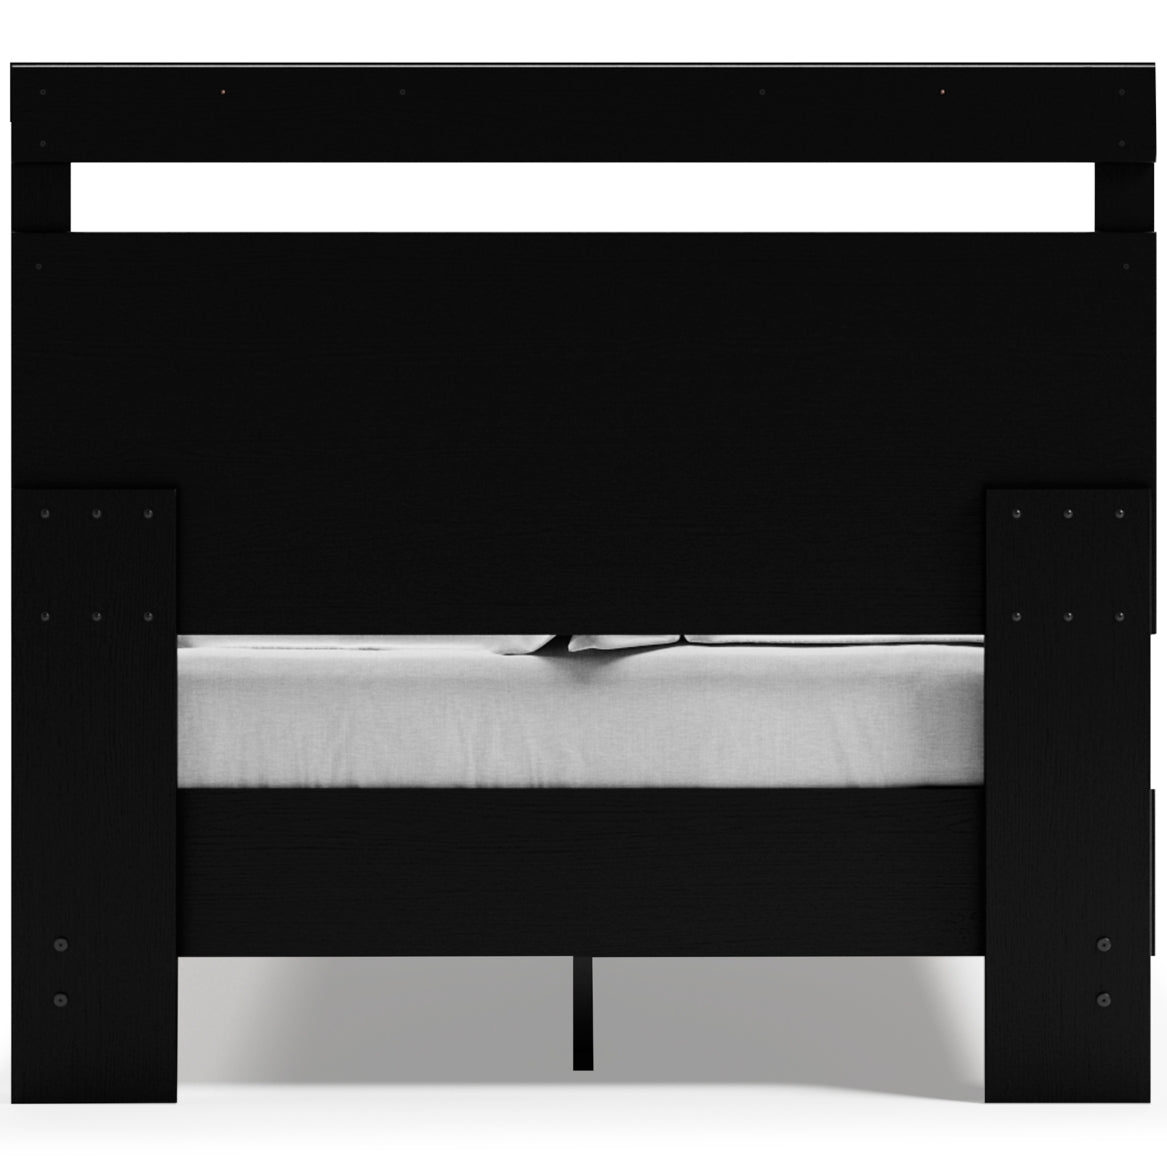 Finch Full Panel Platform Bed - furniture place usa